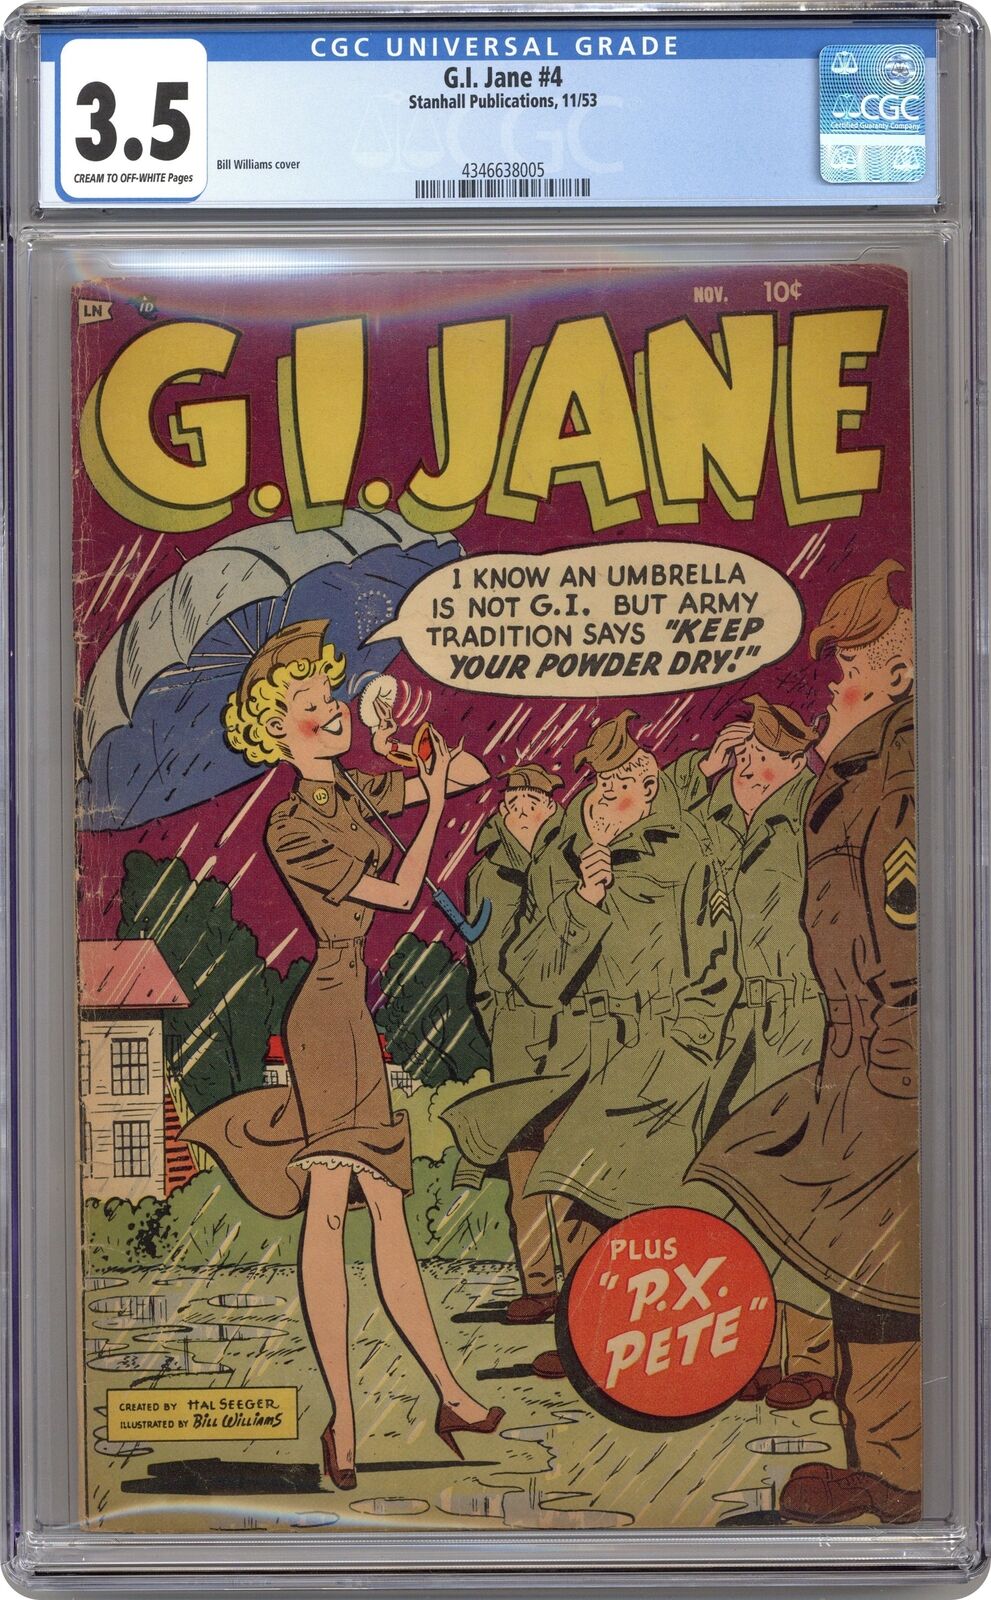 GI Jane #4 CGC 3.5 1953 4346638005